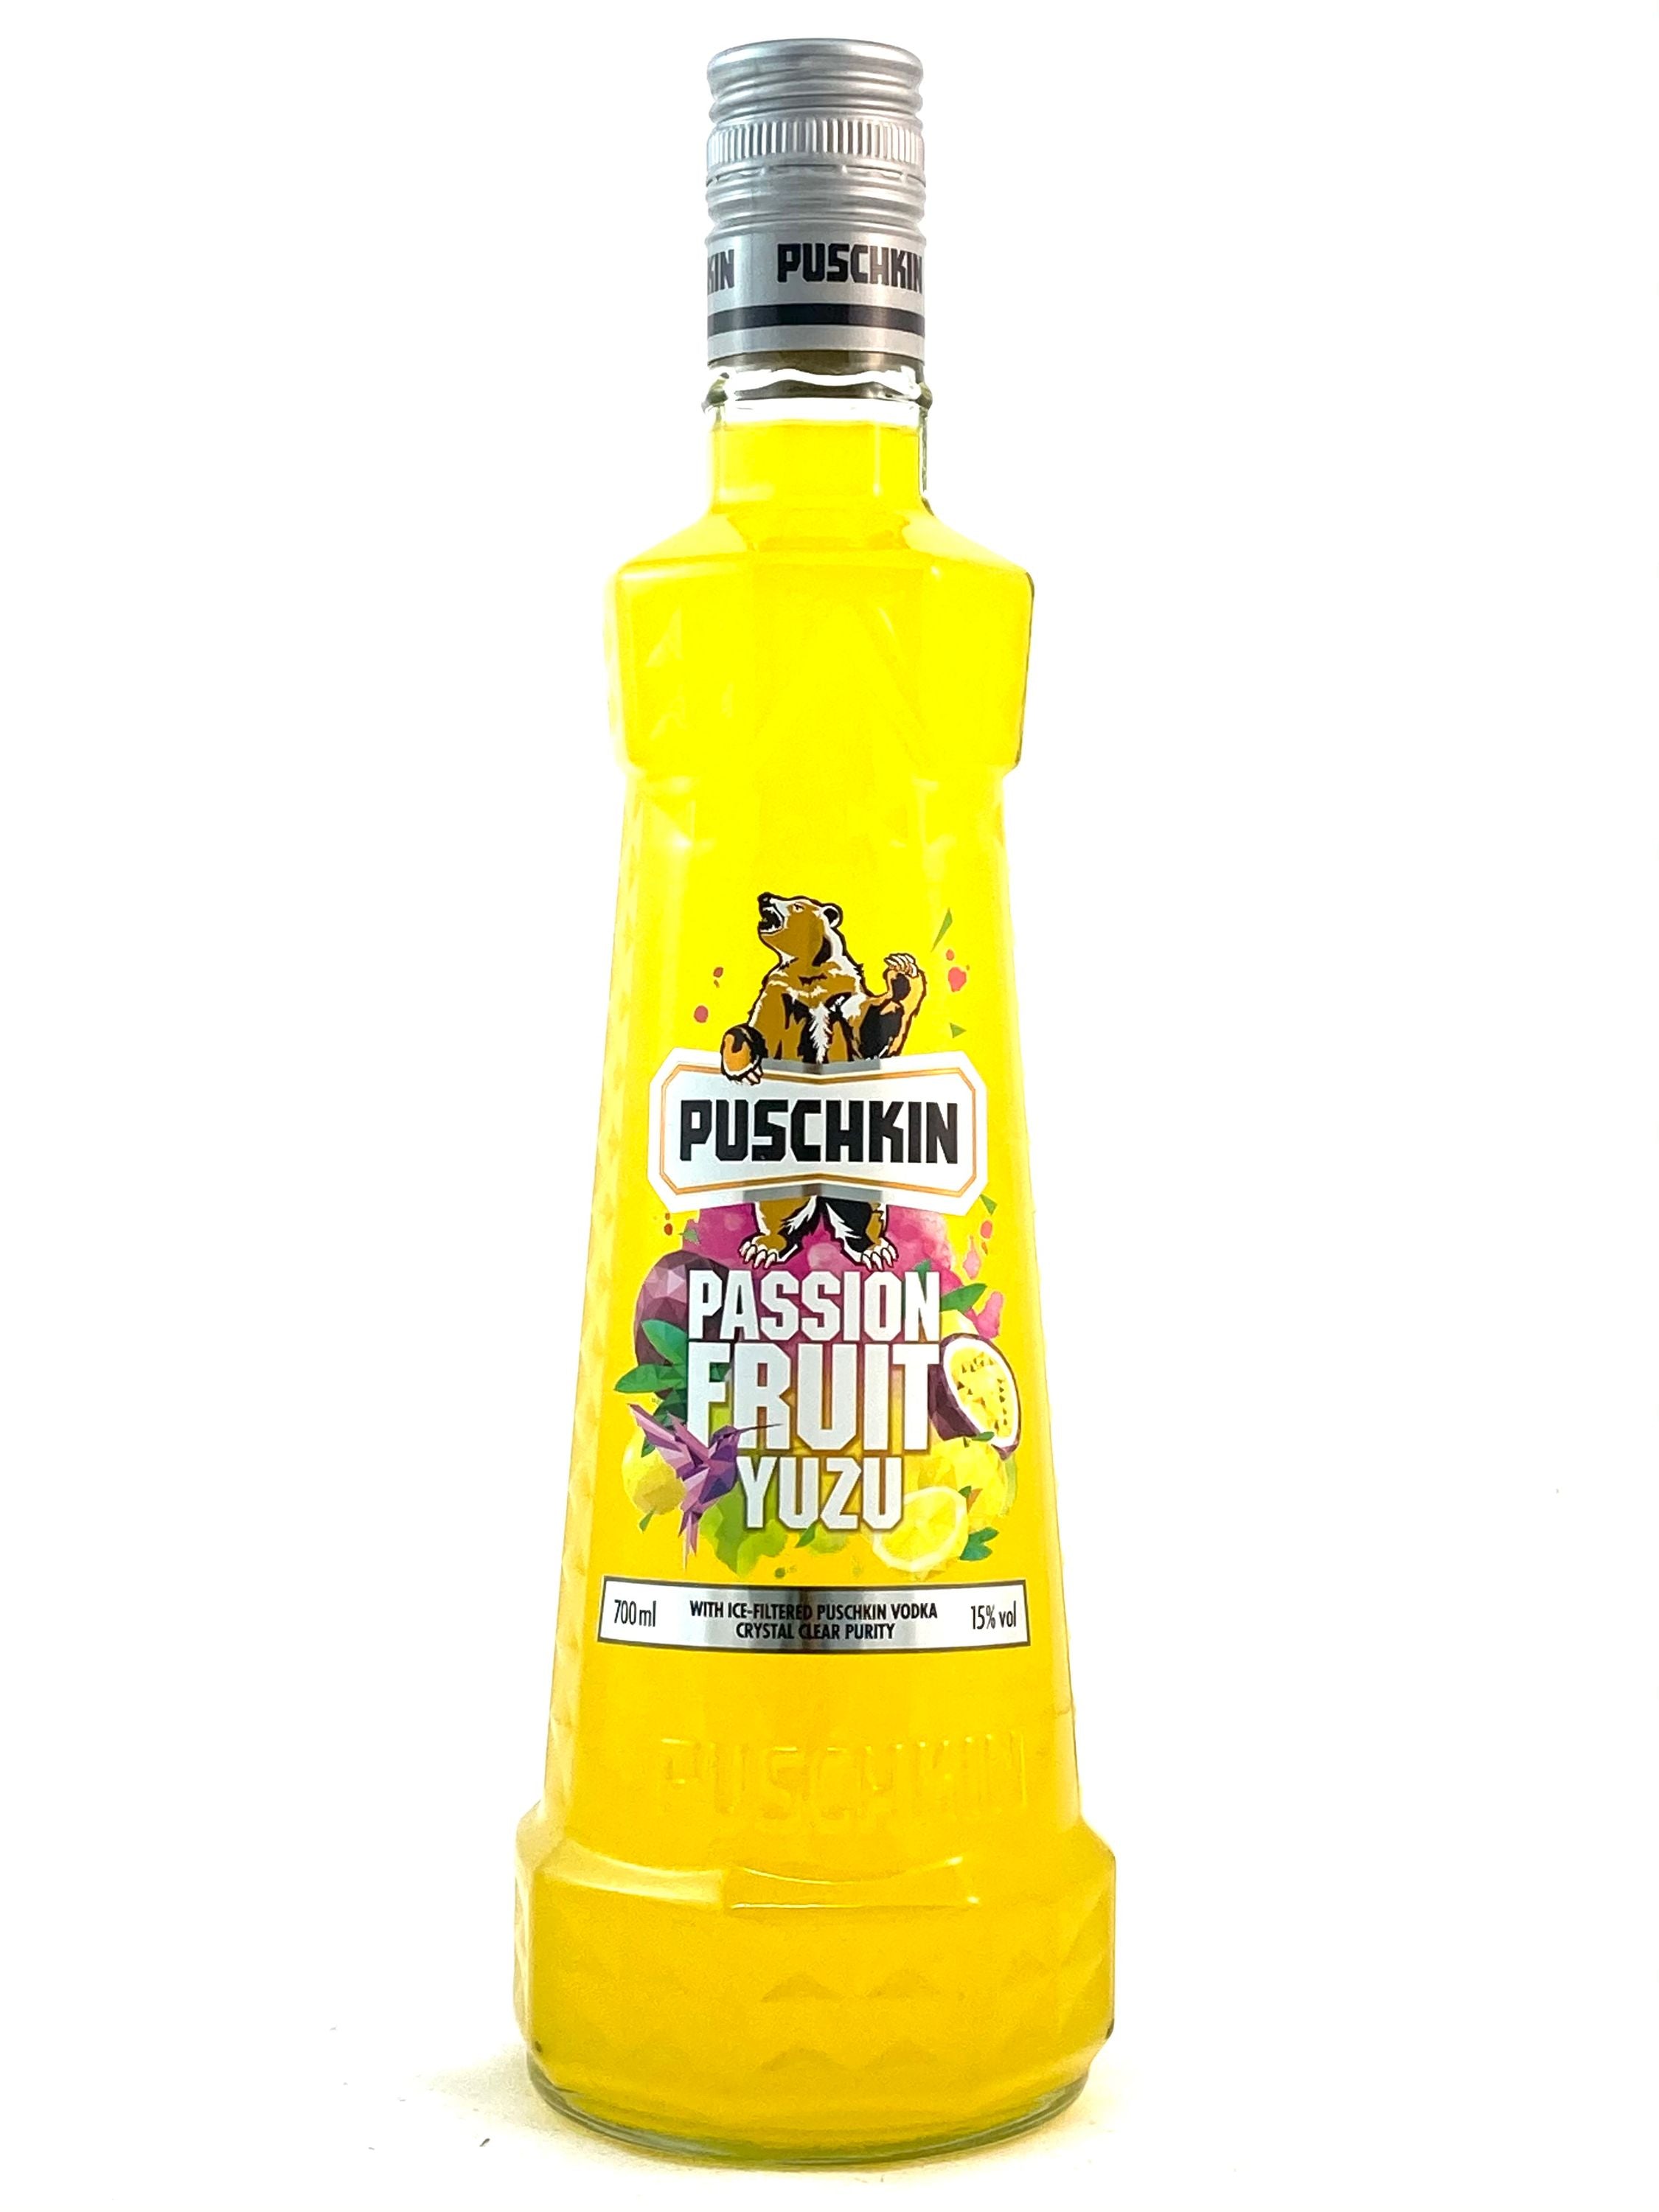 Puschkin Passion Fruit Yuzu 0.7l, alc. 15% by volume, vodka Germany